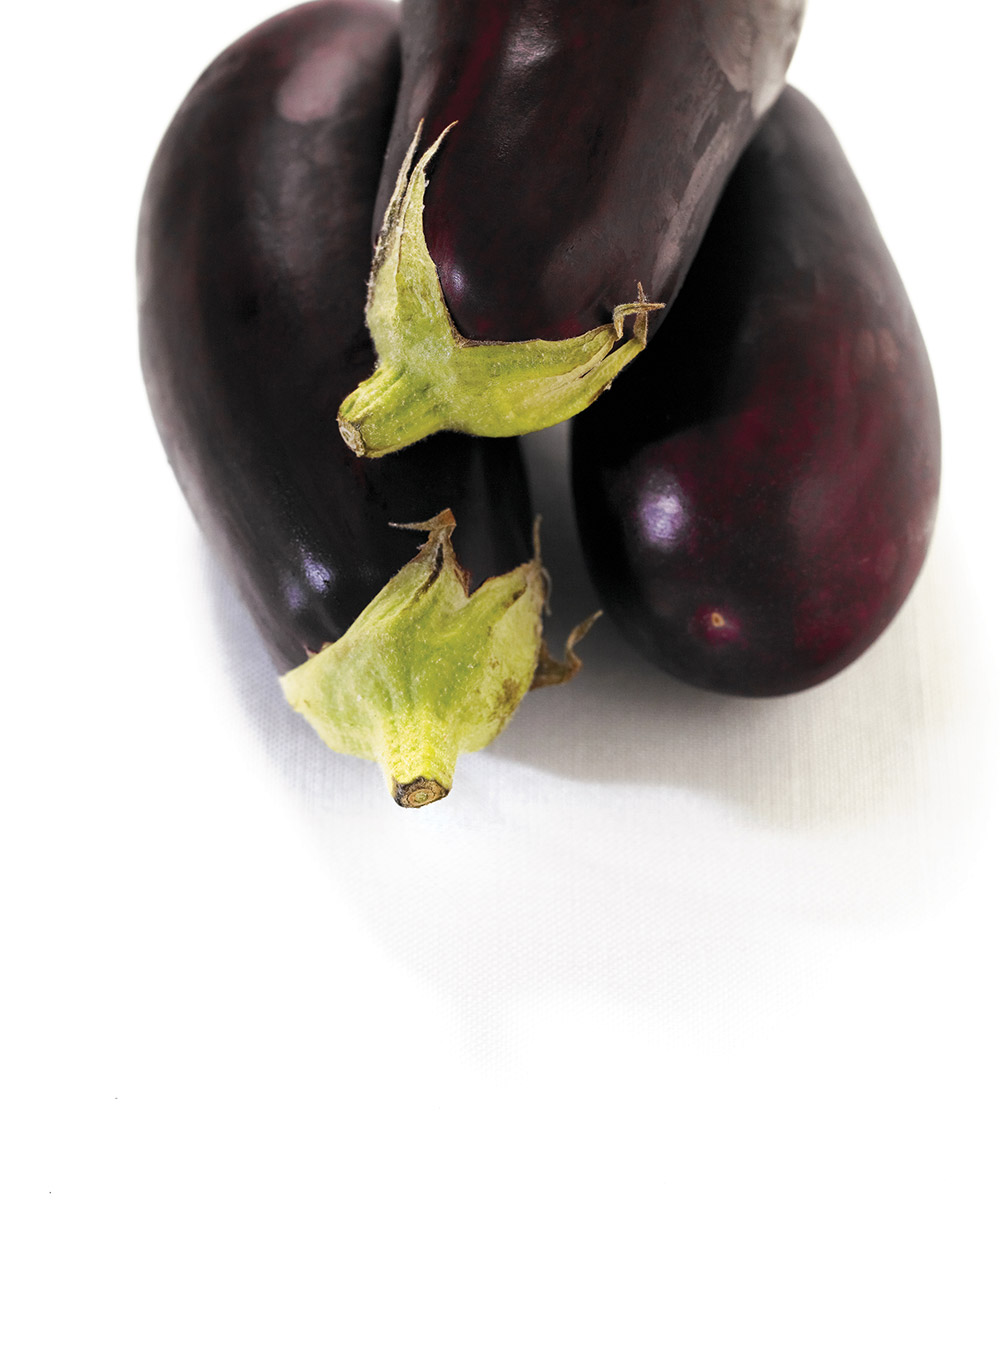 Steven Raichlen’s Argentinian-Style Grilled Eggplants